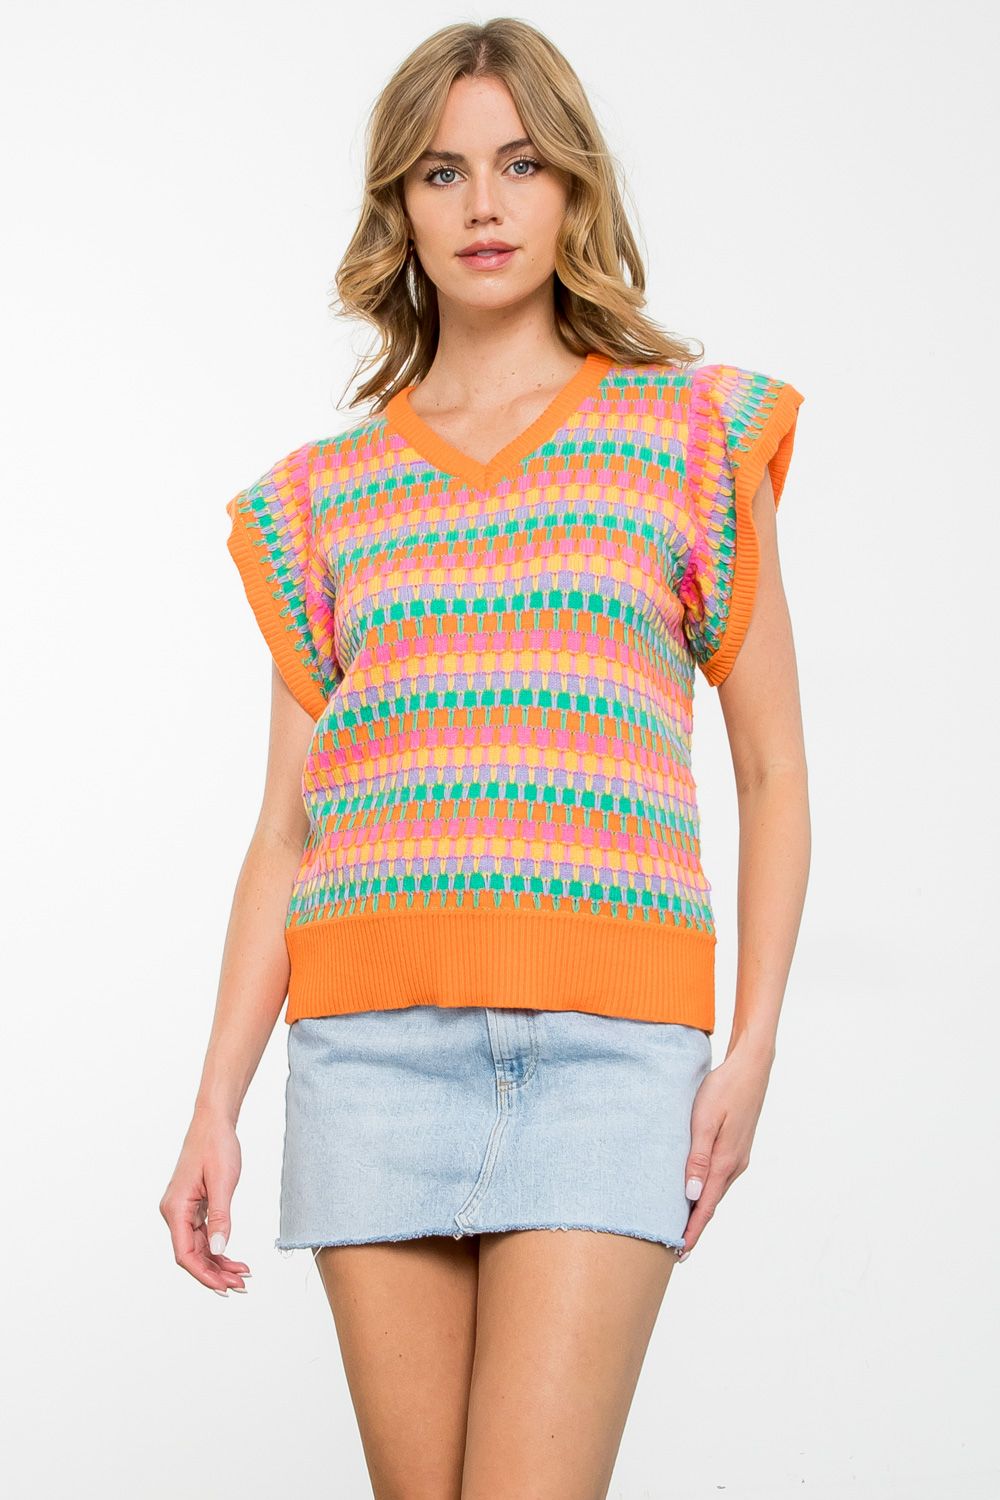 Multi color knit top